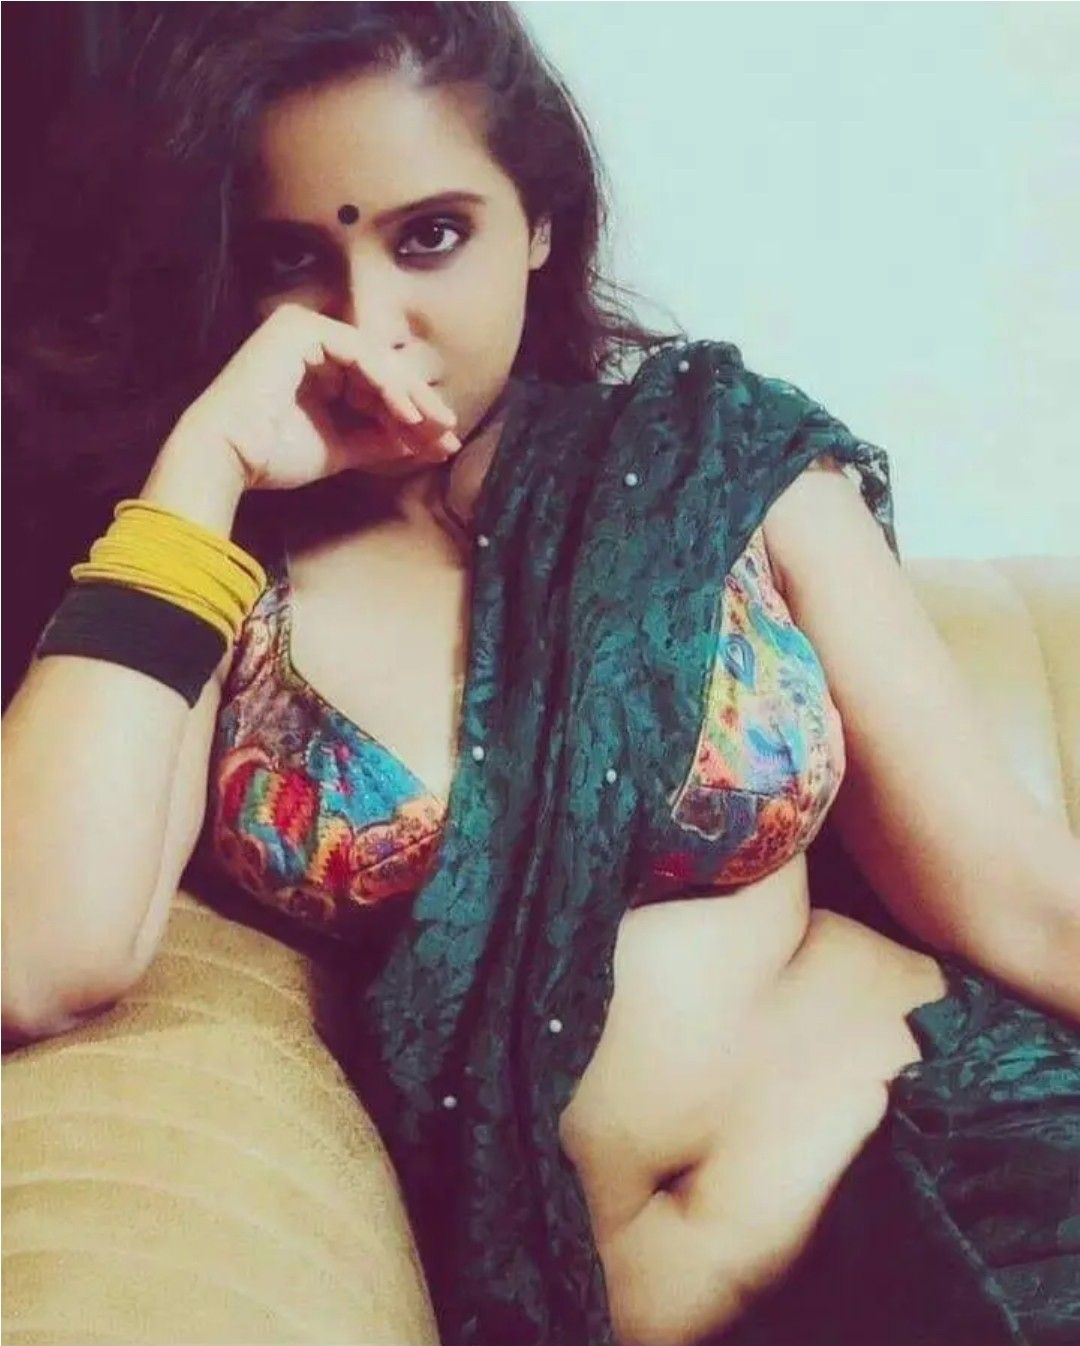 Black  saree Lover| Saree Lover|Sexy Saree |Sexy Bhabhi |Bhabhi Lover's |Bhabh